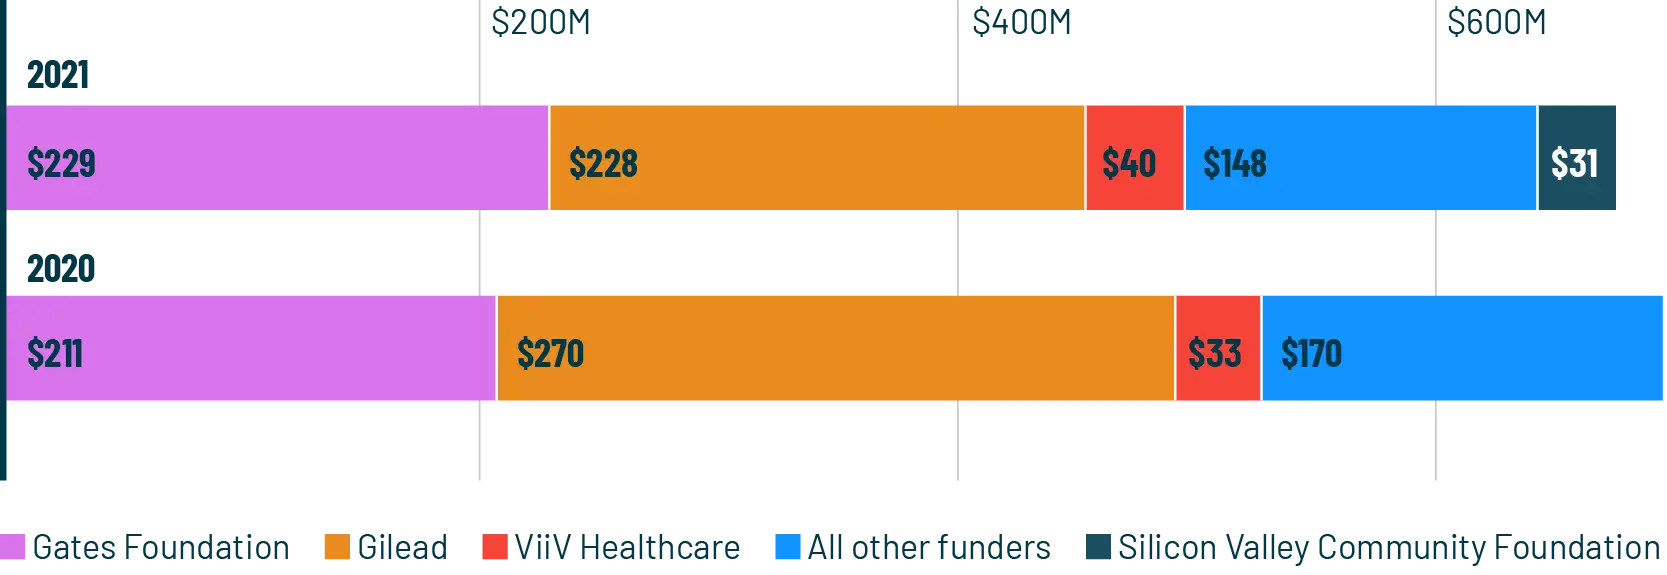 2020-2021 Same Set of Funders Comparison (US$ Millions) *